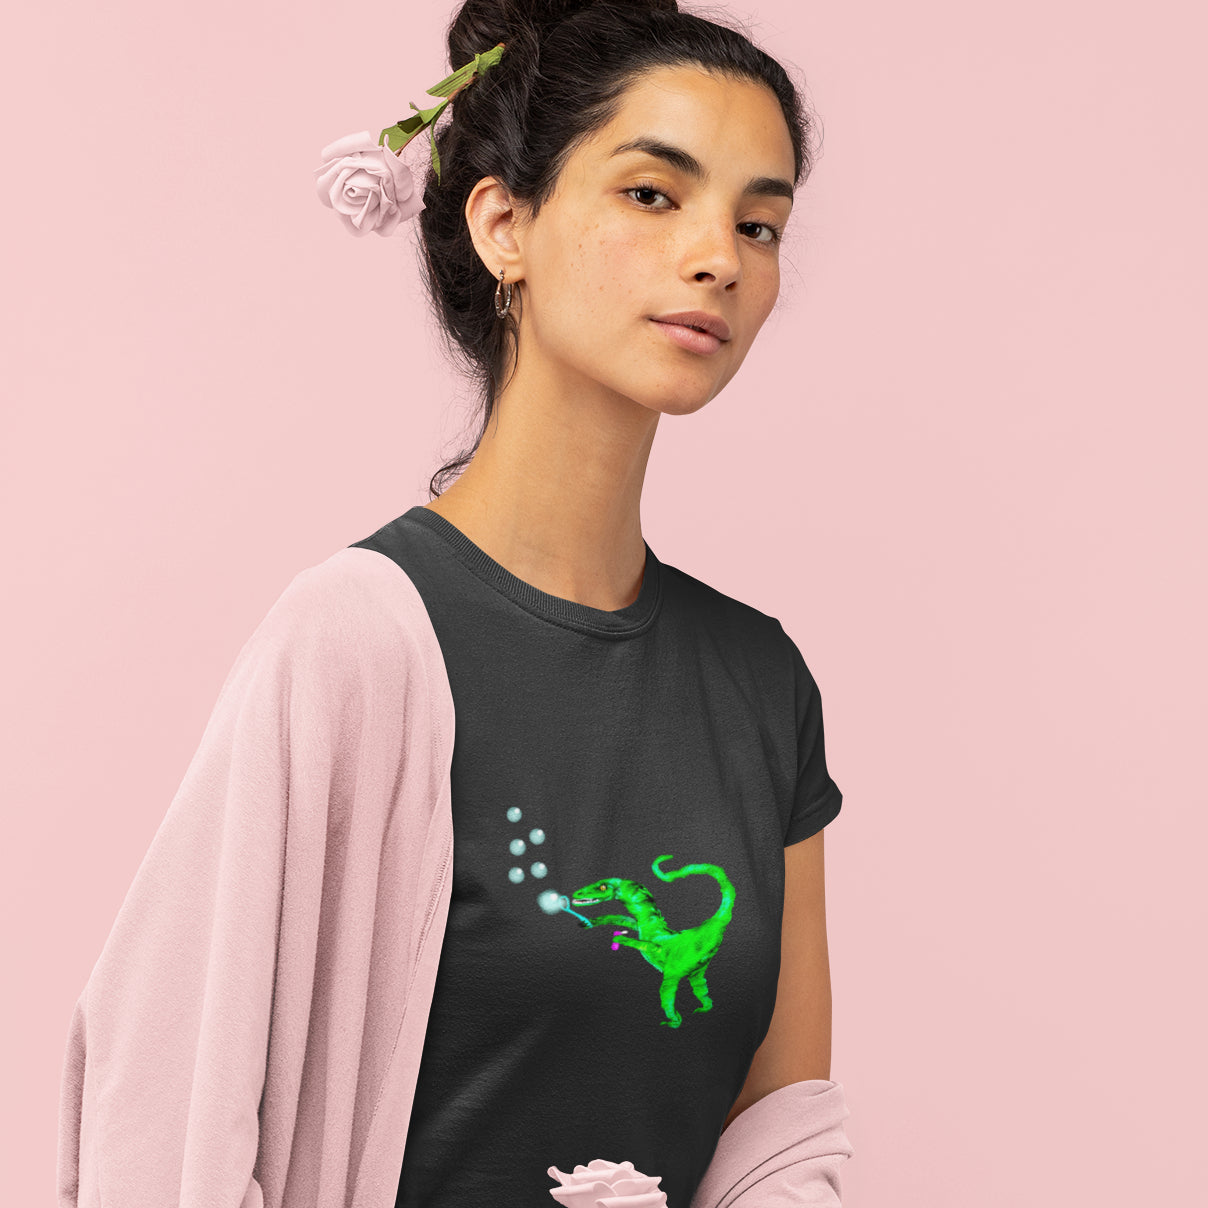 Velociraptor blowing bubbles Women's vegan organic cotton t-shirt in black